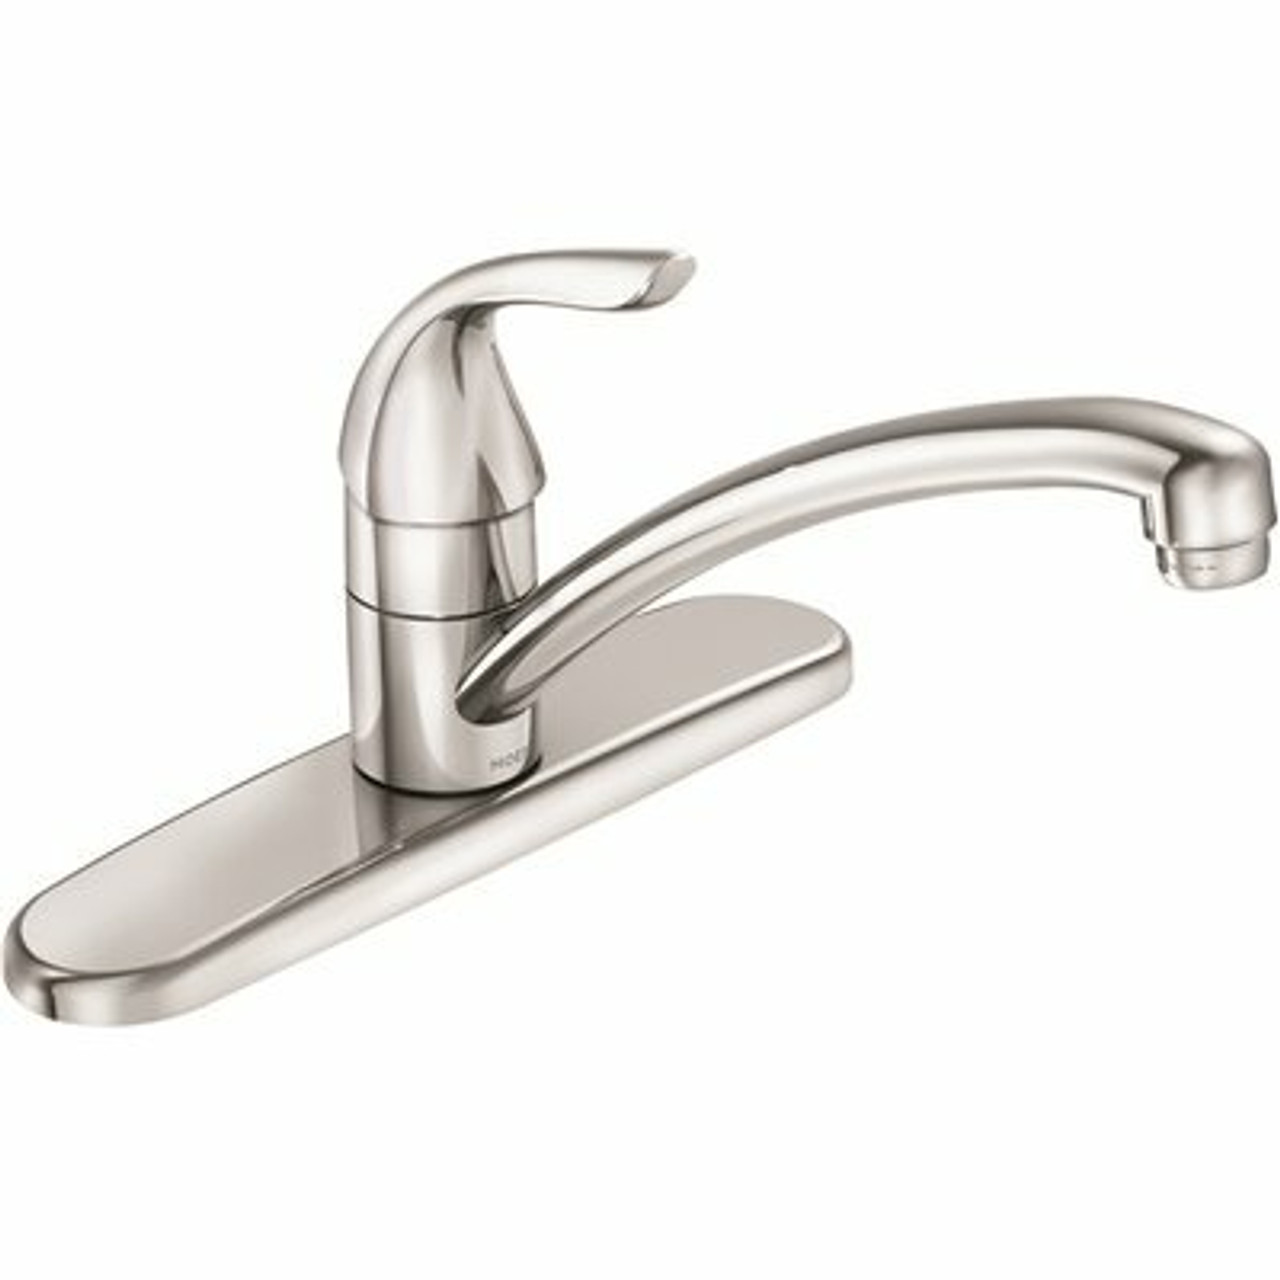 Moen Adler Single-Handle Low Arc Standard Kitchen Faucet In Chrome - 305718393